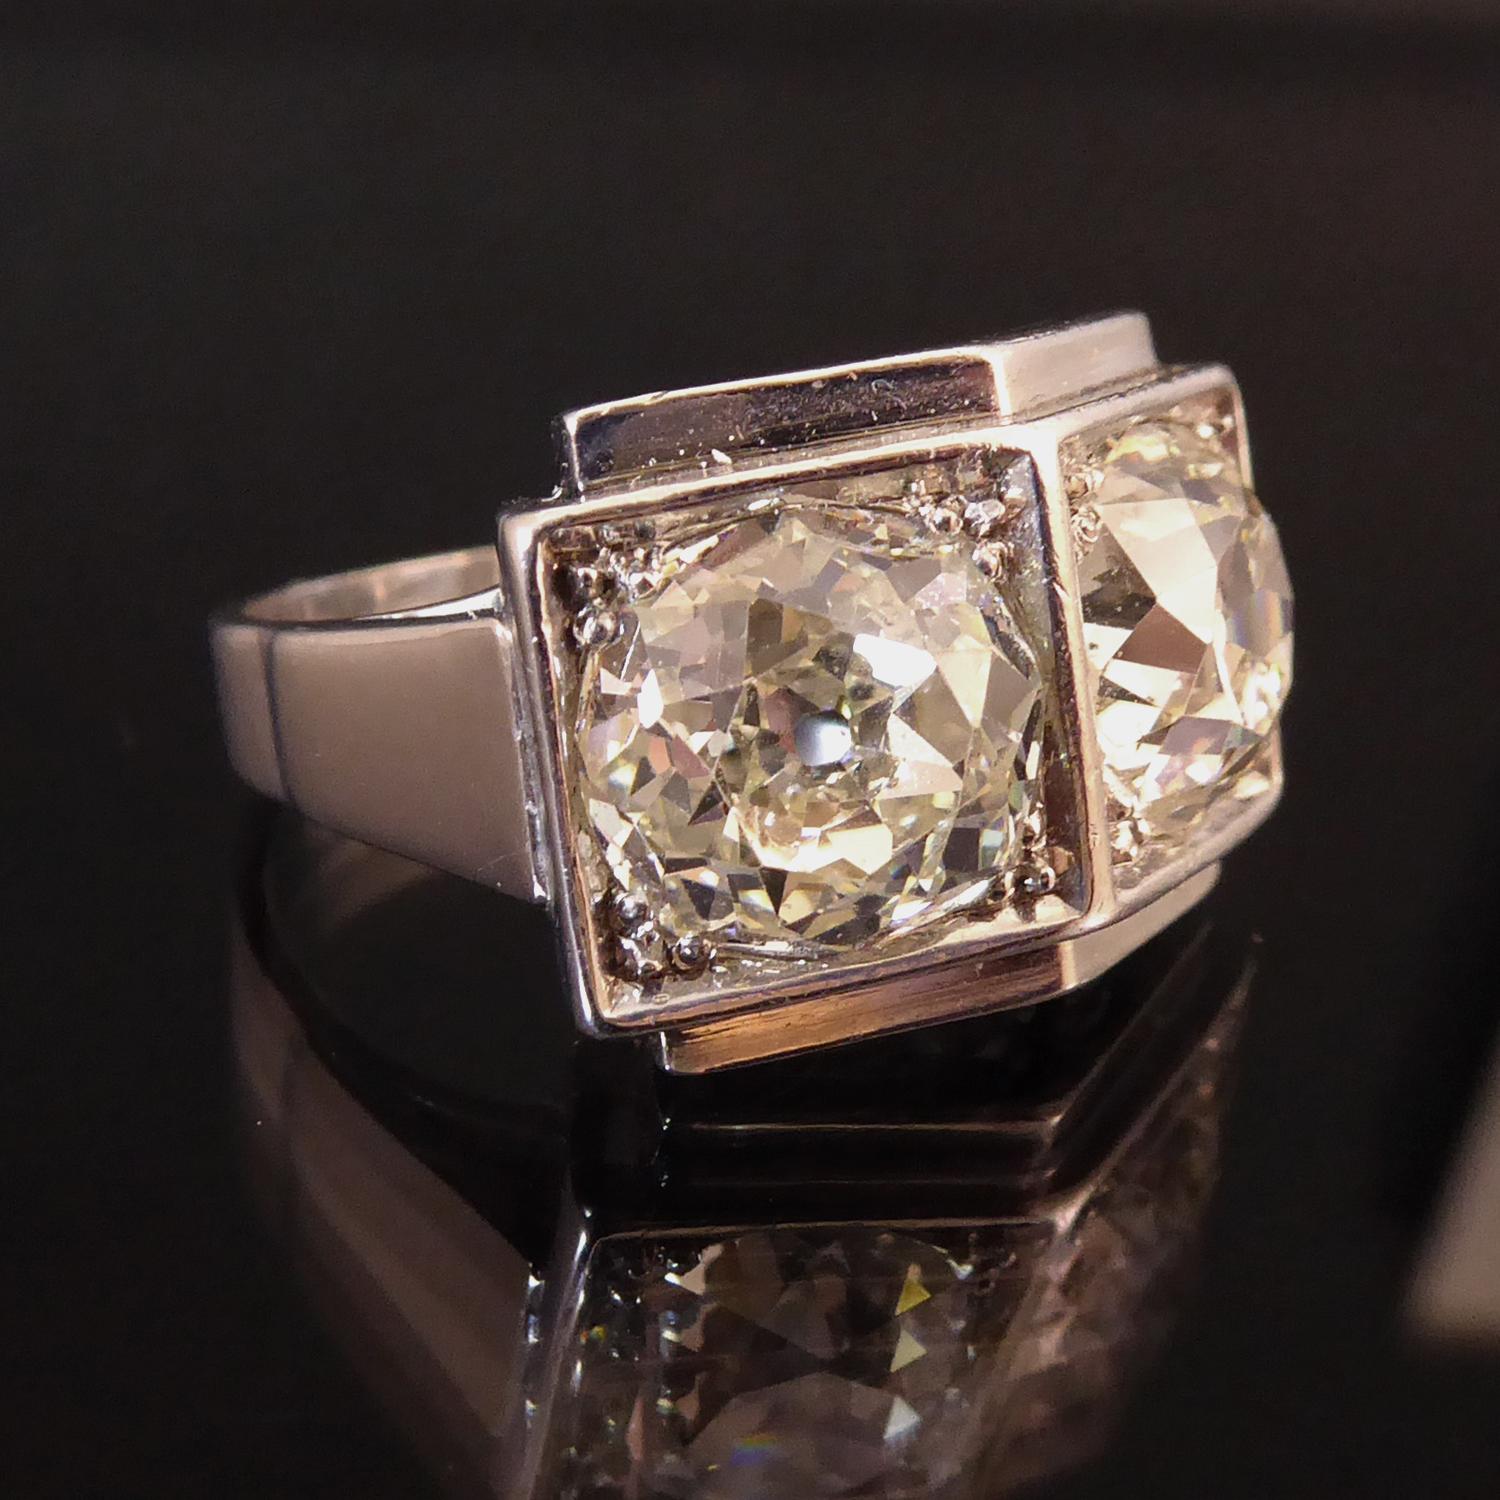 Modernist 5.05 Carat Diamond Ring, Old European Cut Diamonds, French Design, Platinum